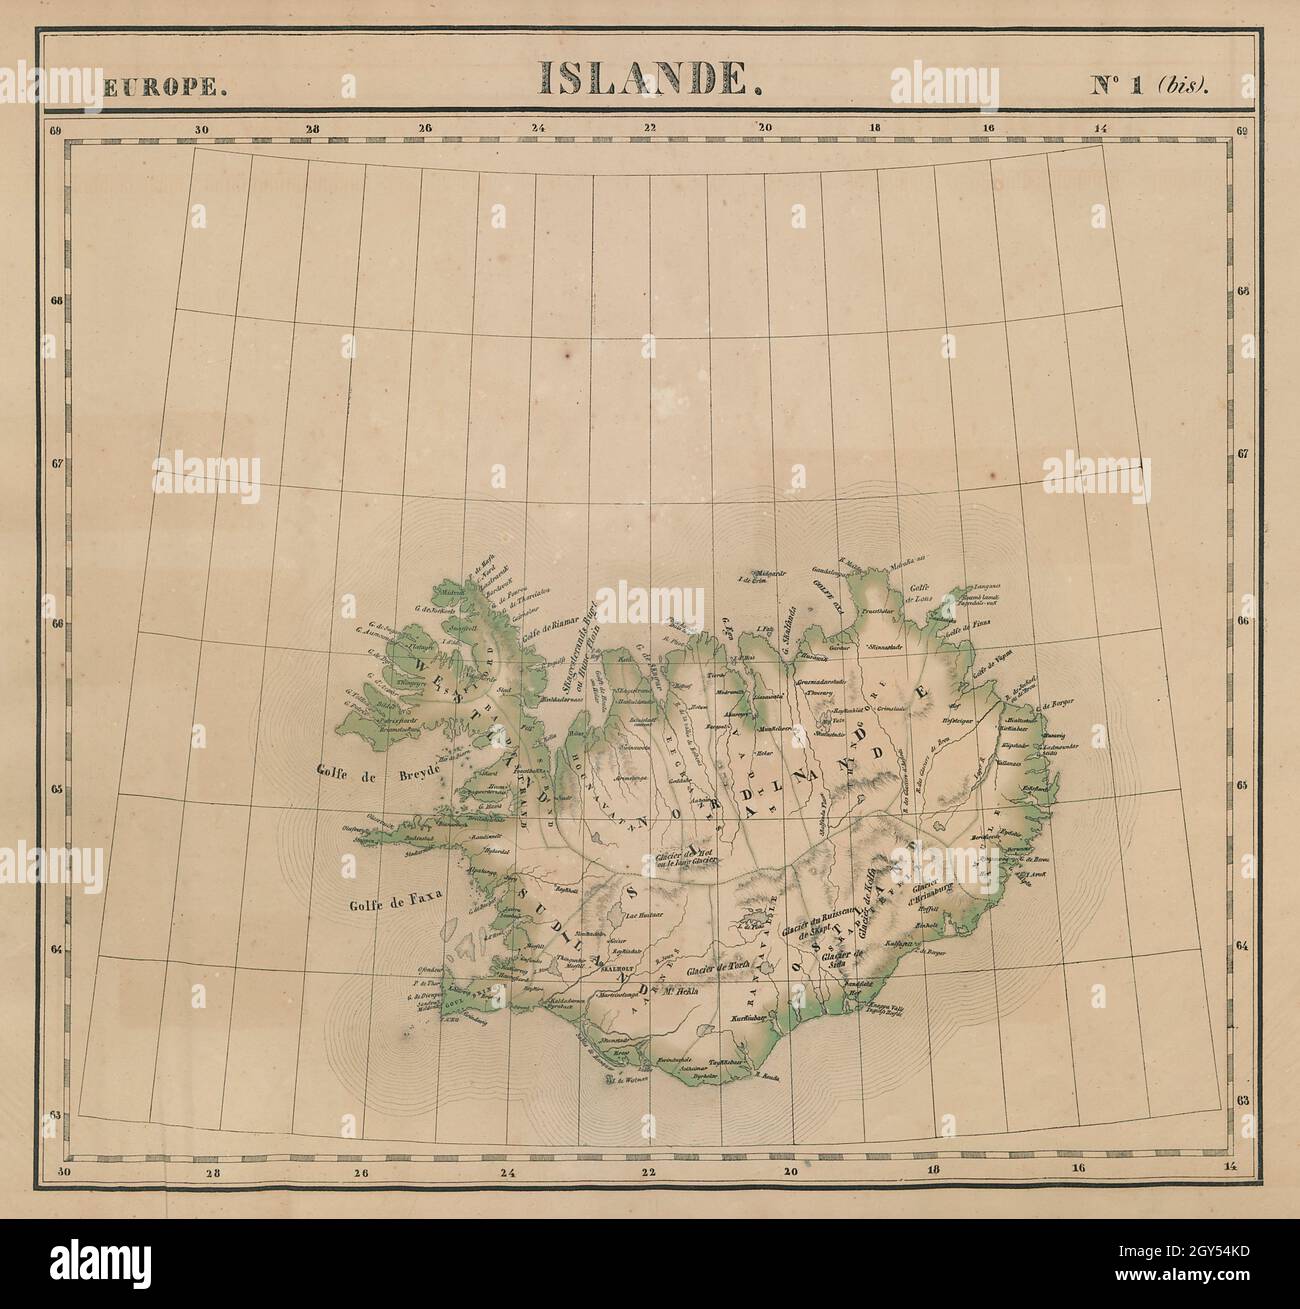 Europe.Islande #1 (bis) Islande.VANDERMAELEN 1827 carte ancienne carte de plan Banque D'Images